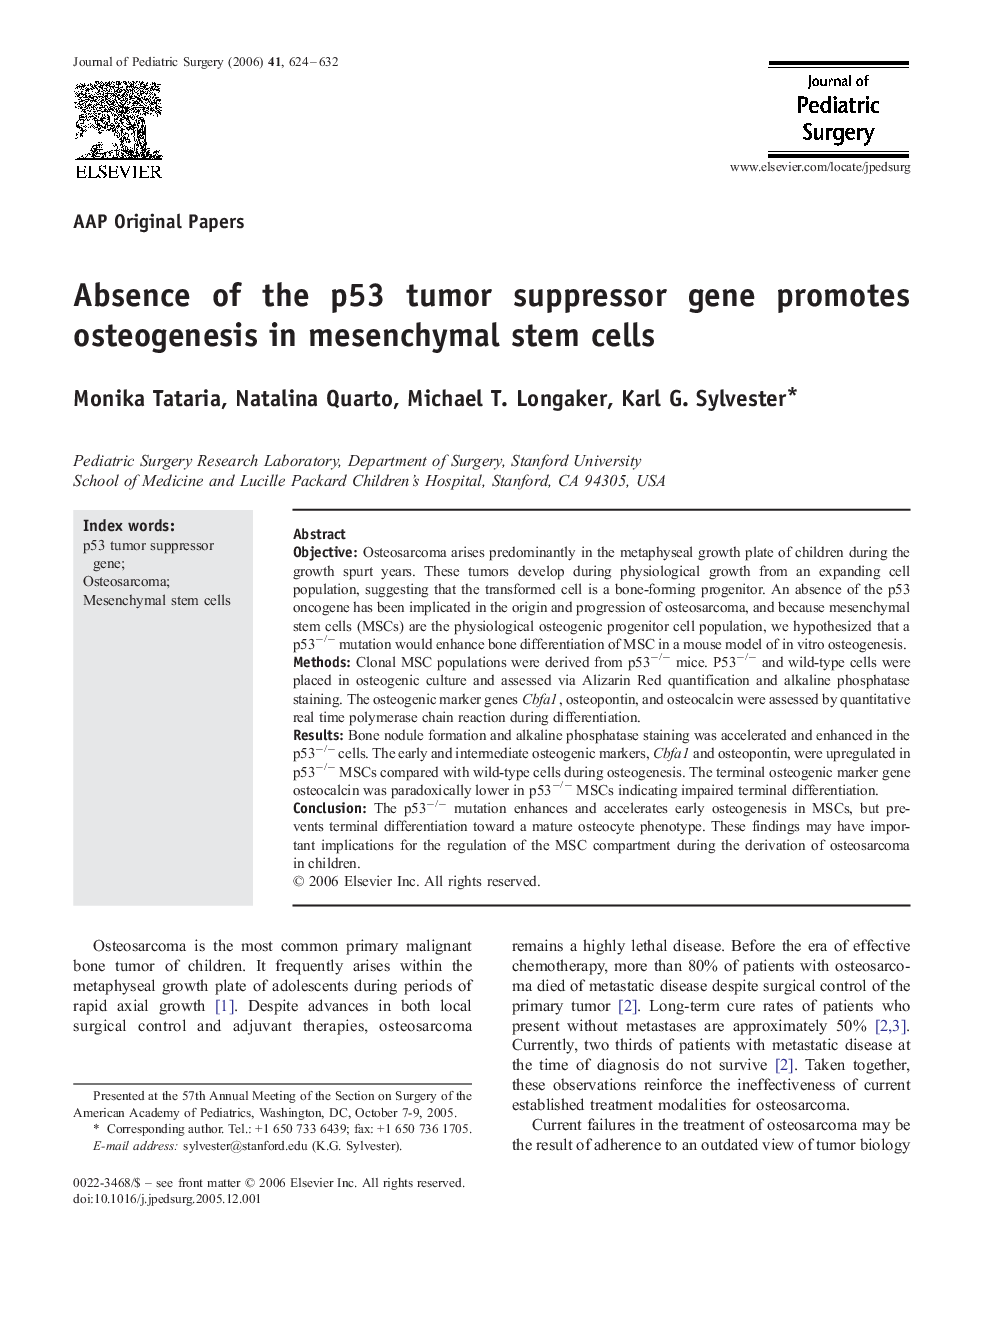 Absence of the p53 tumor suppressor gene promotes osteogenesis in mesenchymal stem cells 